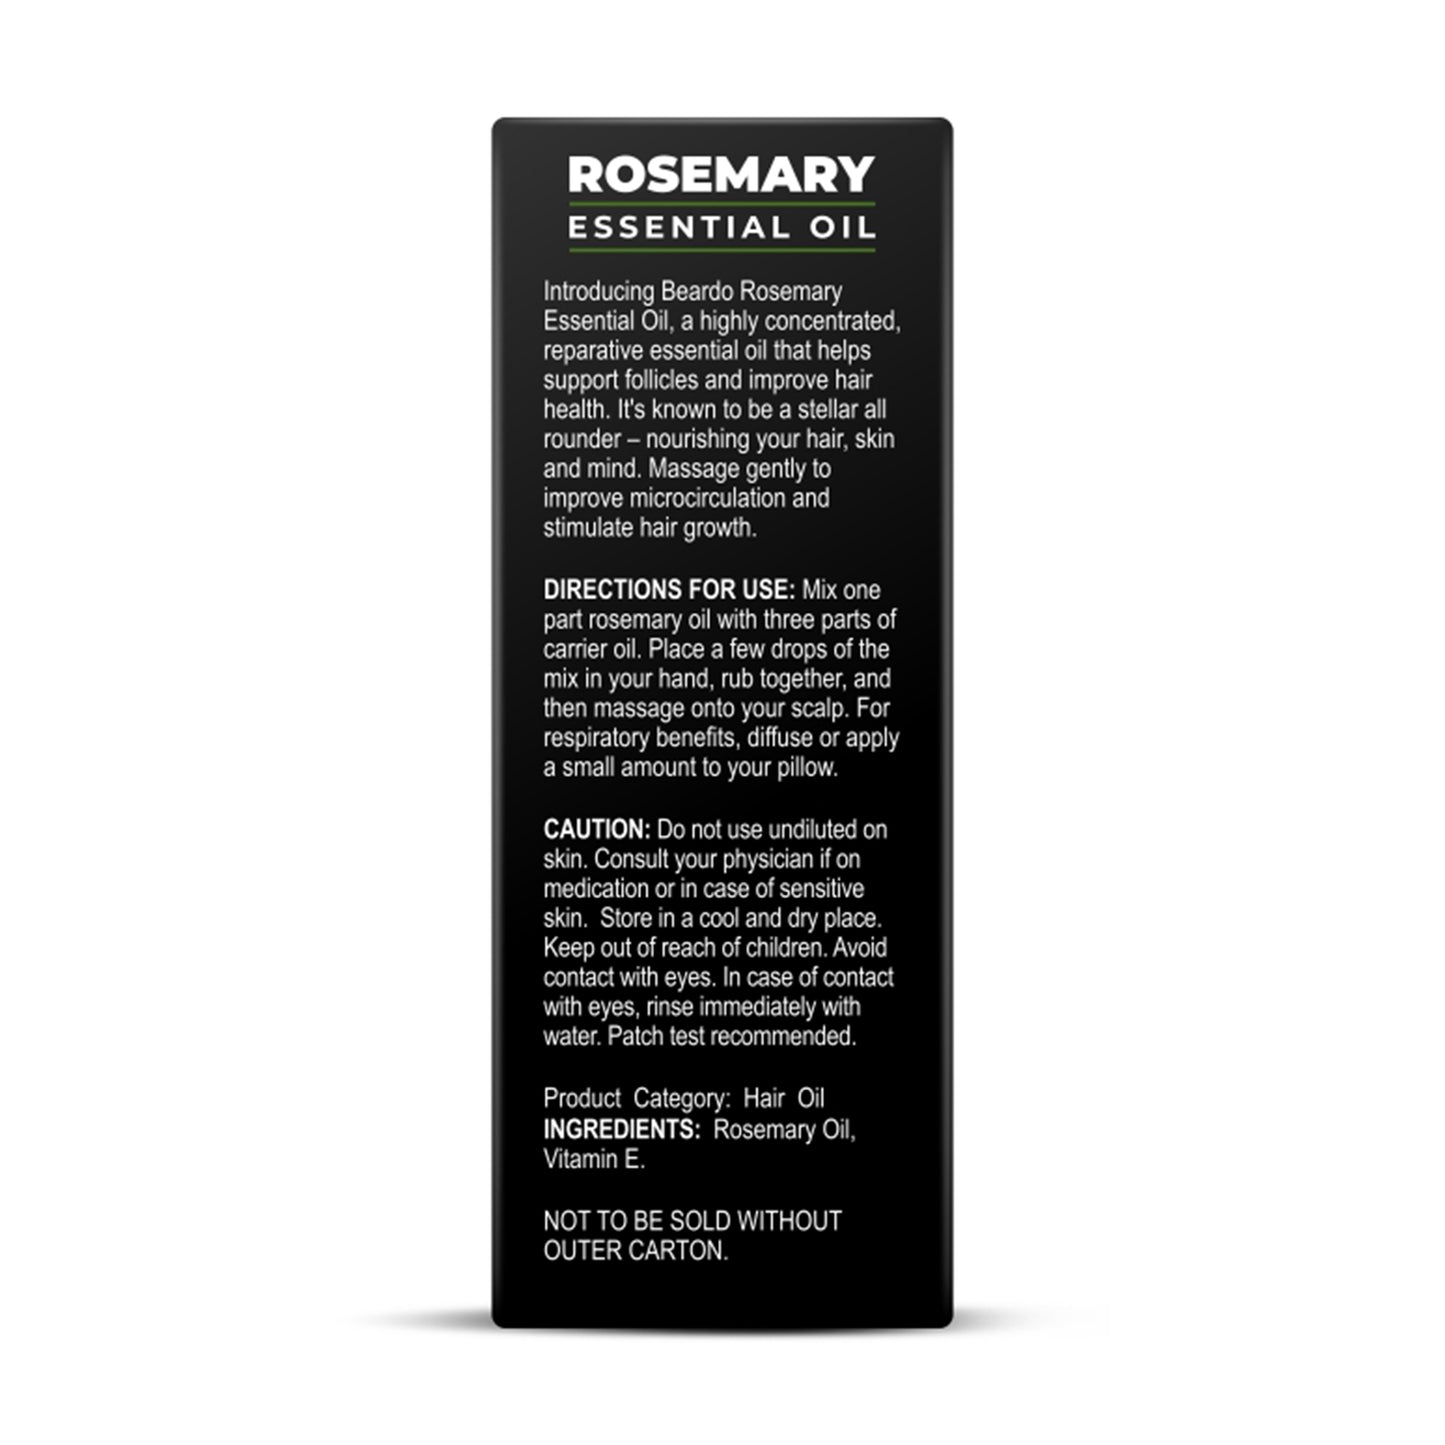 Beardo Rosemary Essential Oil